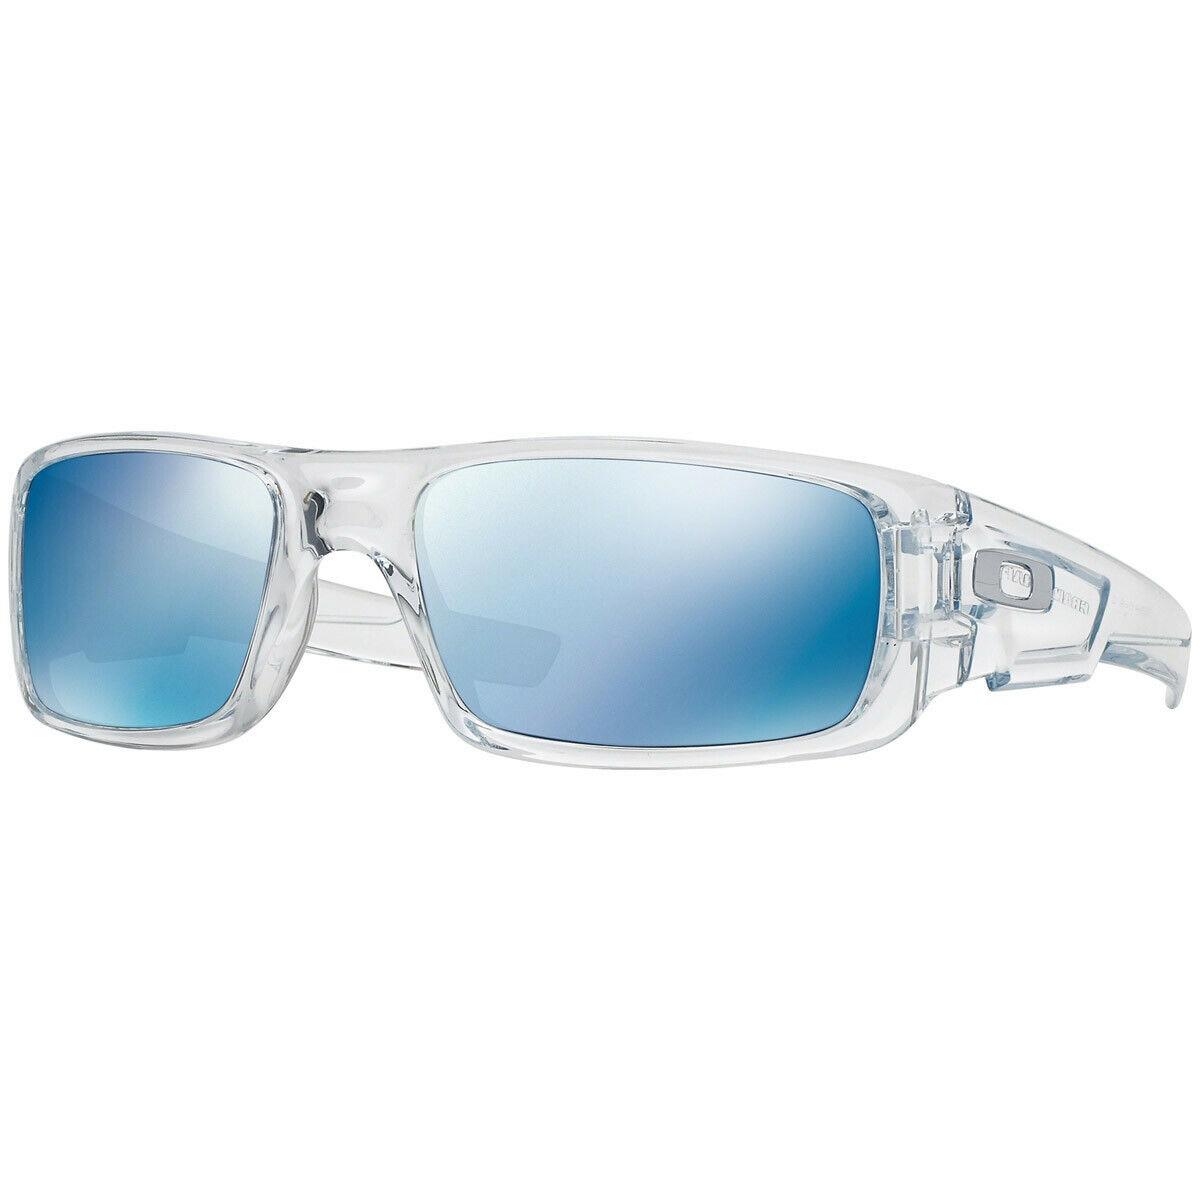 Oakley Crankshaft Sunglasses OO9239-04 Polished Clear Frame / Ice Iridium Lens - Polished Clear Frame, Ice Iridium Lens